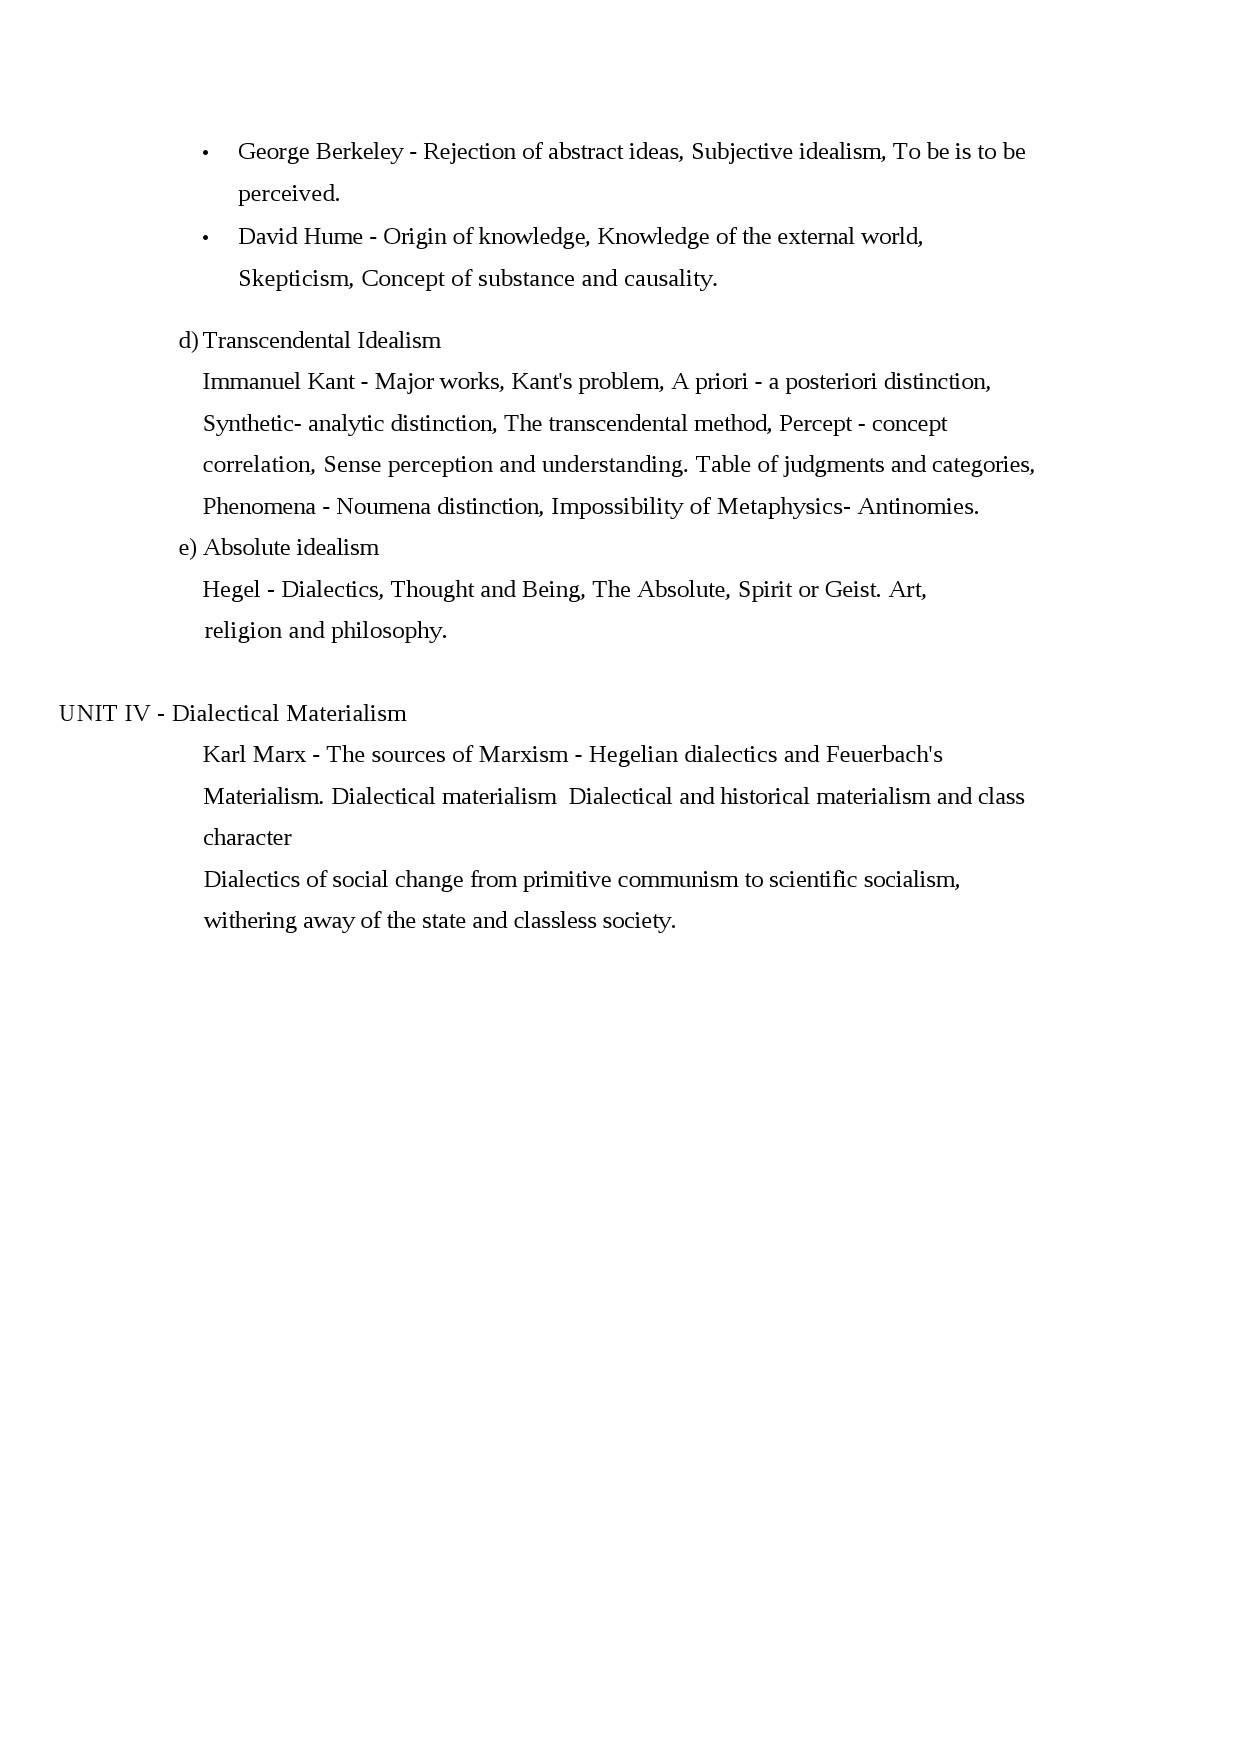 Humanities Syllabus for Kerala PSC 2021 Exam - Notification Image 5